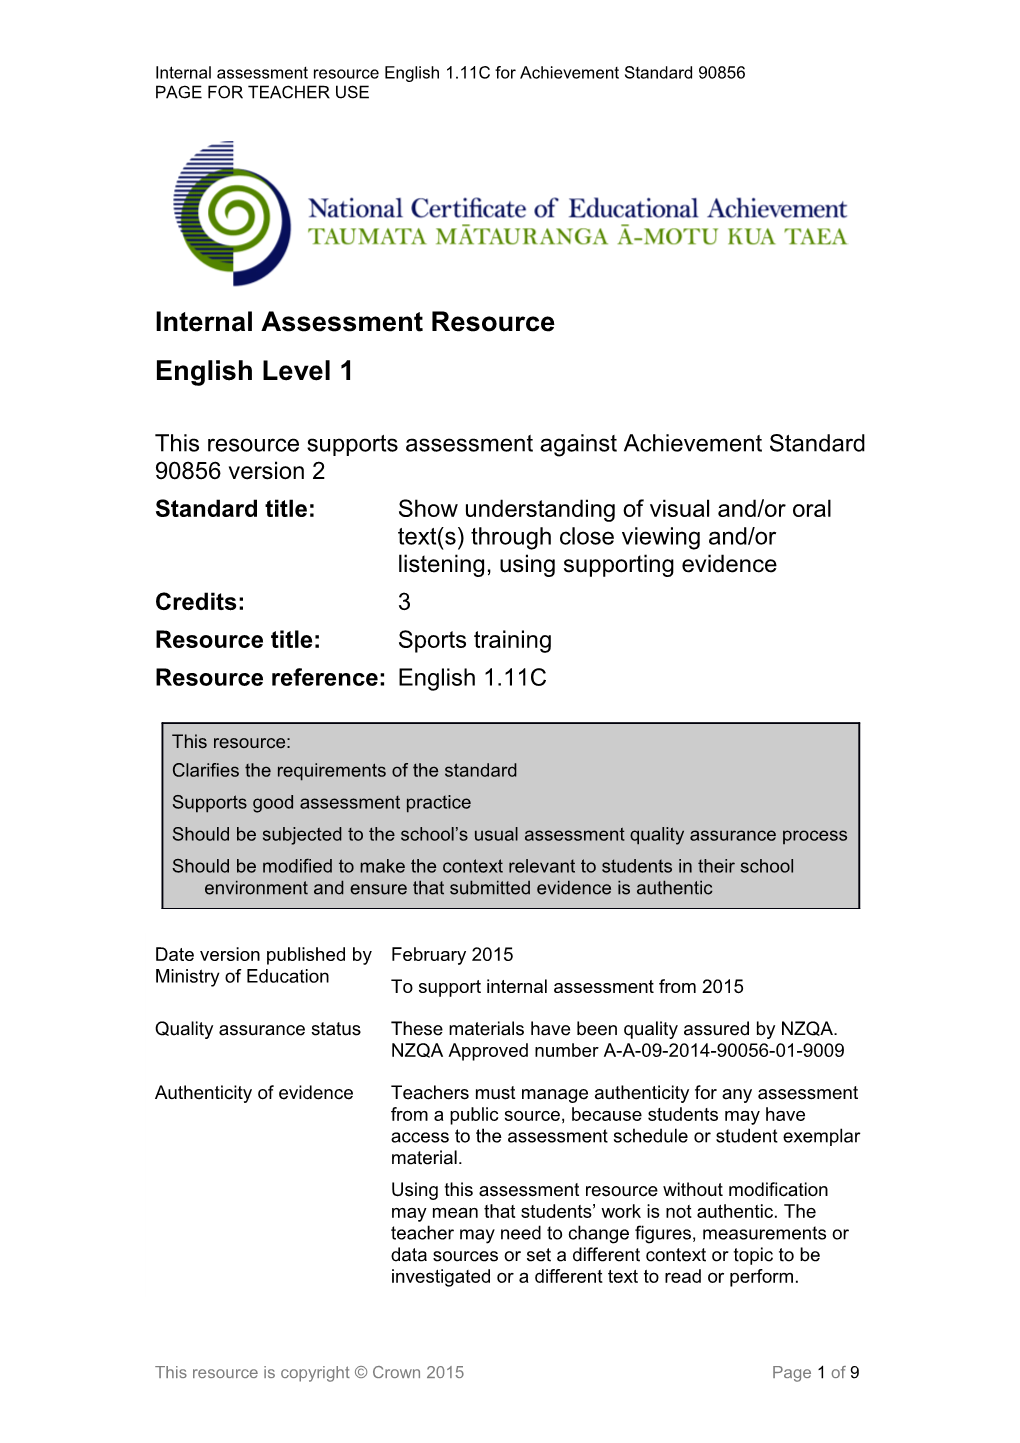 Internal Assessment Resource L1 English